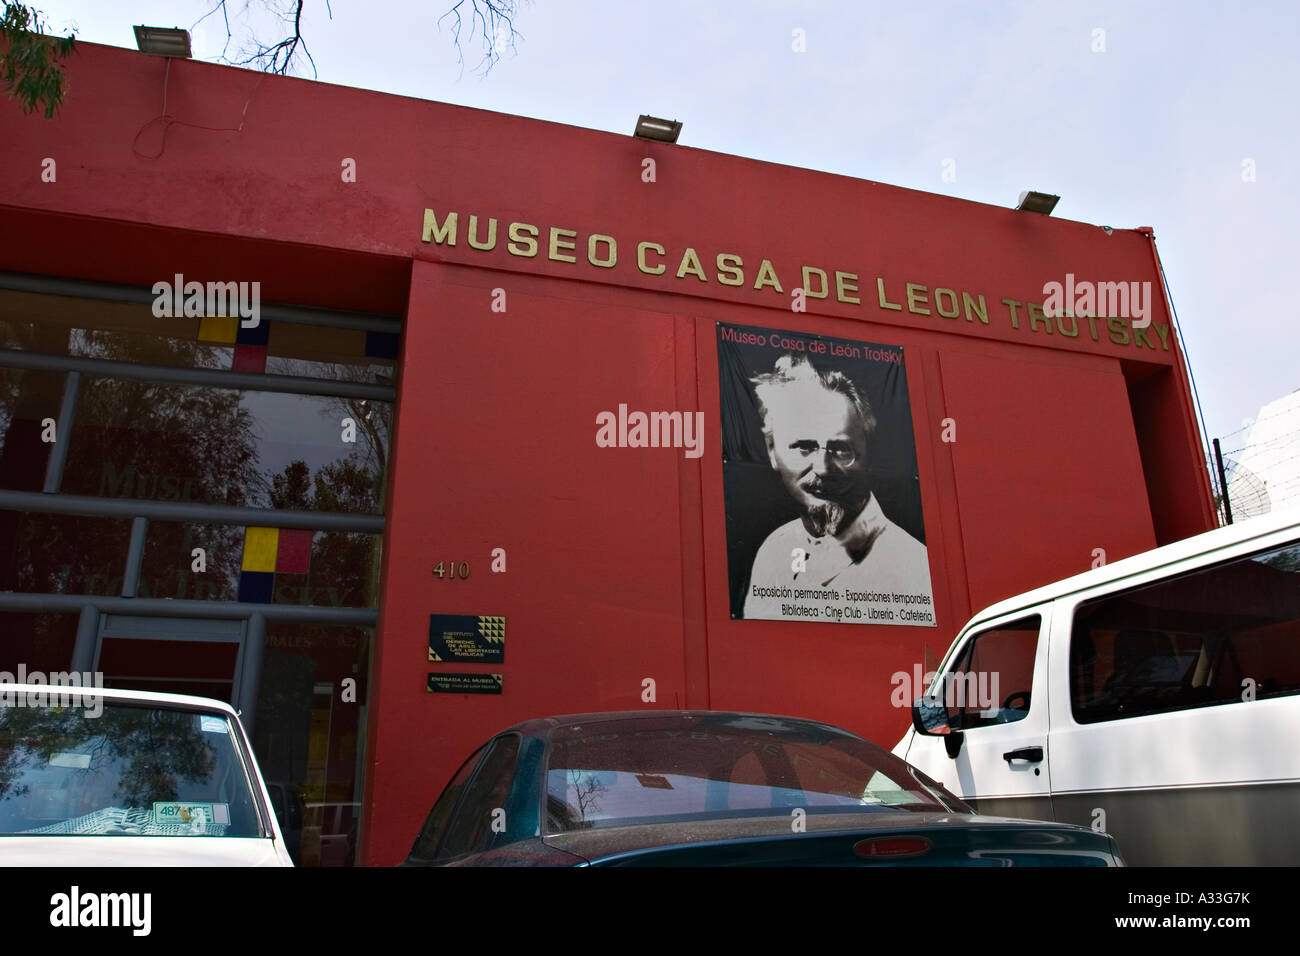 Museo Casa De Leon Trotsky, Leon Trotsky Museum,  Mexico City, Mexico Stock Photo